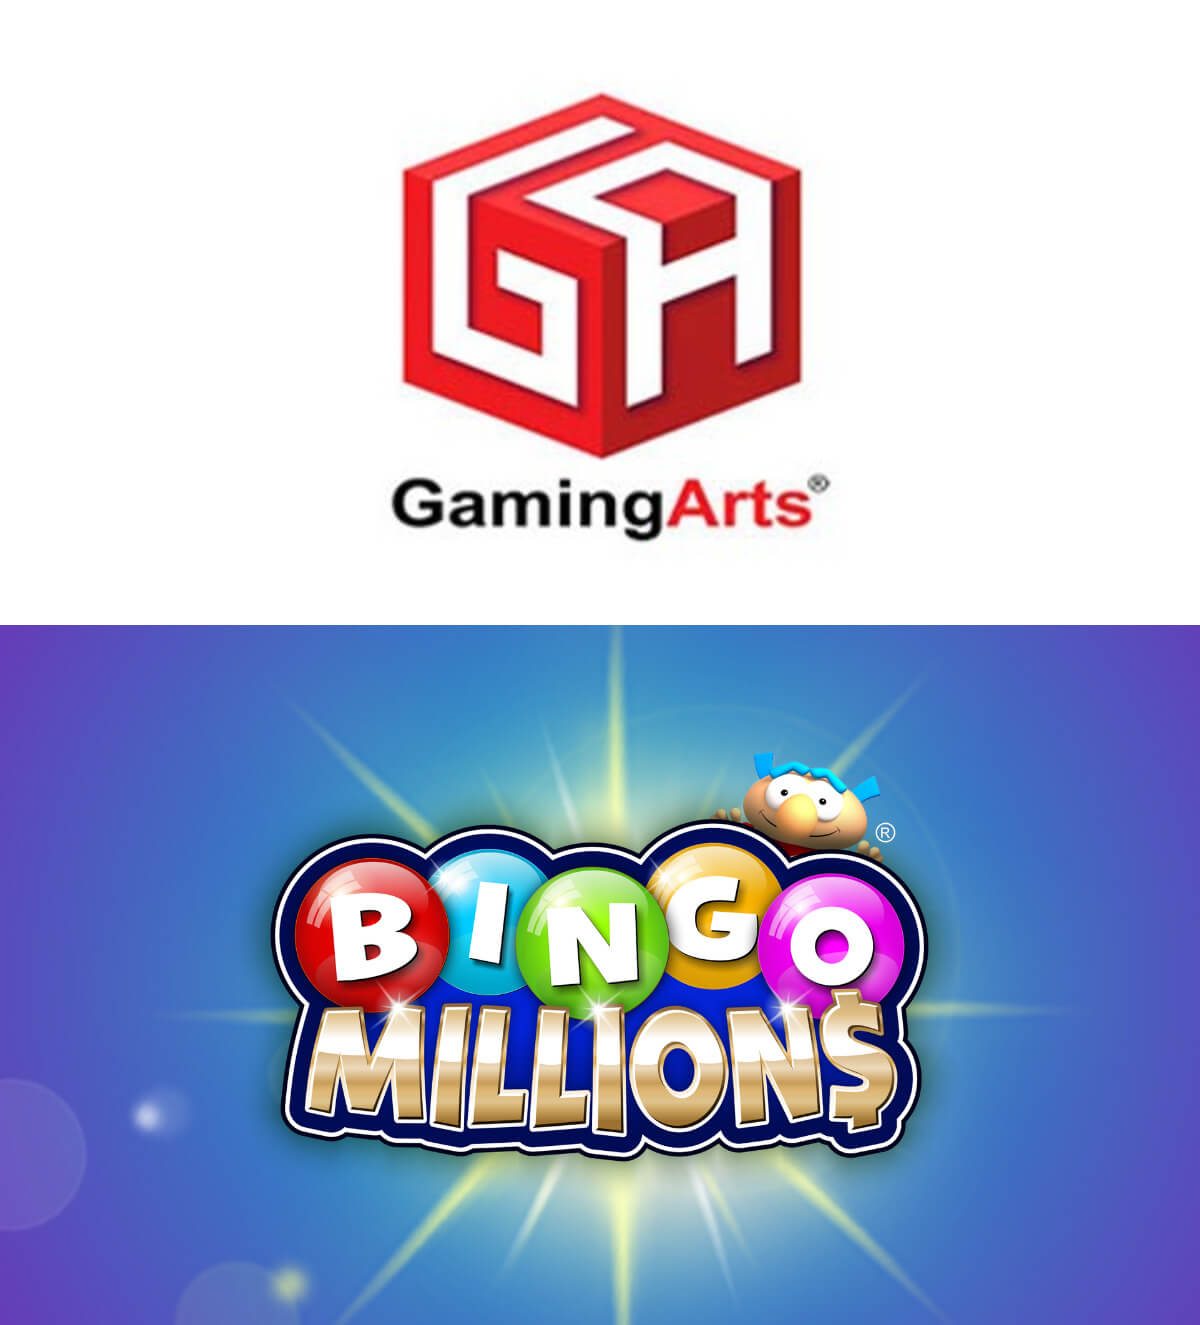 Gaming Arts launches Bingo Millions game in Manitoba